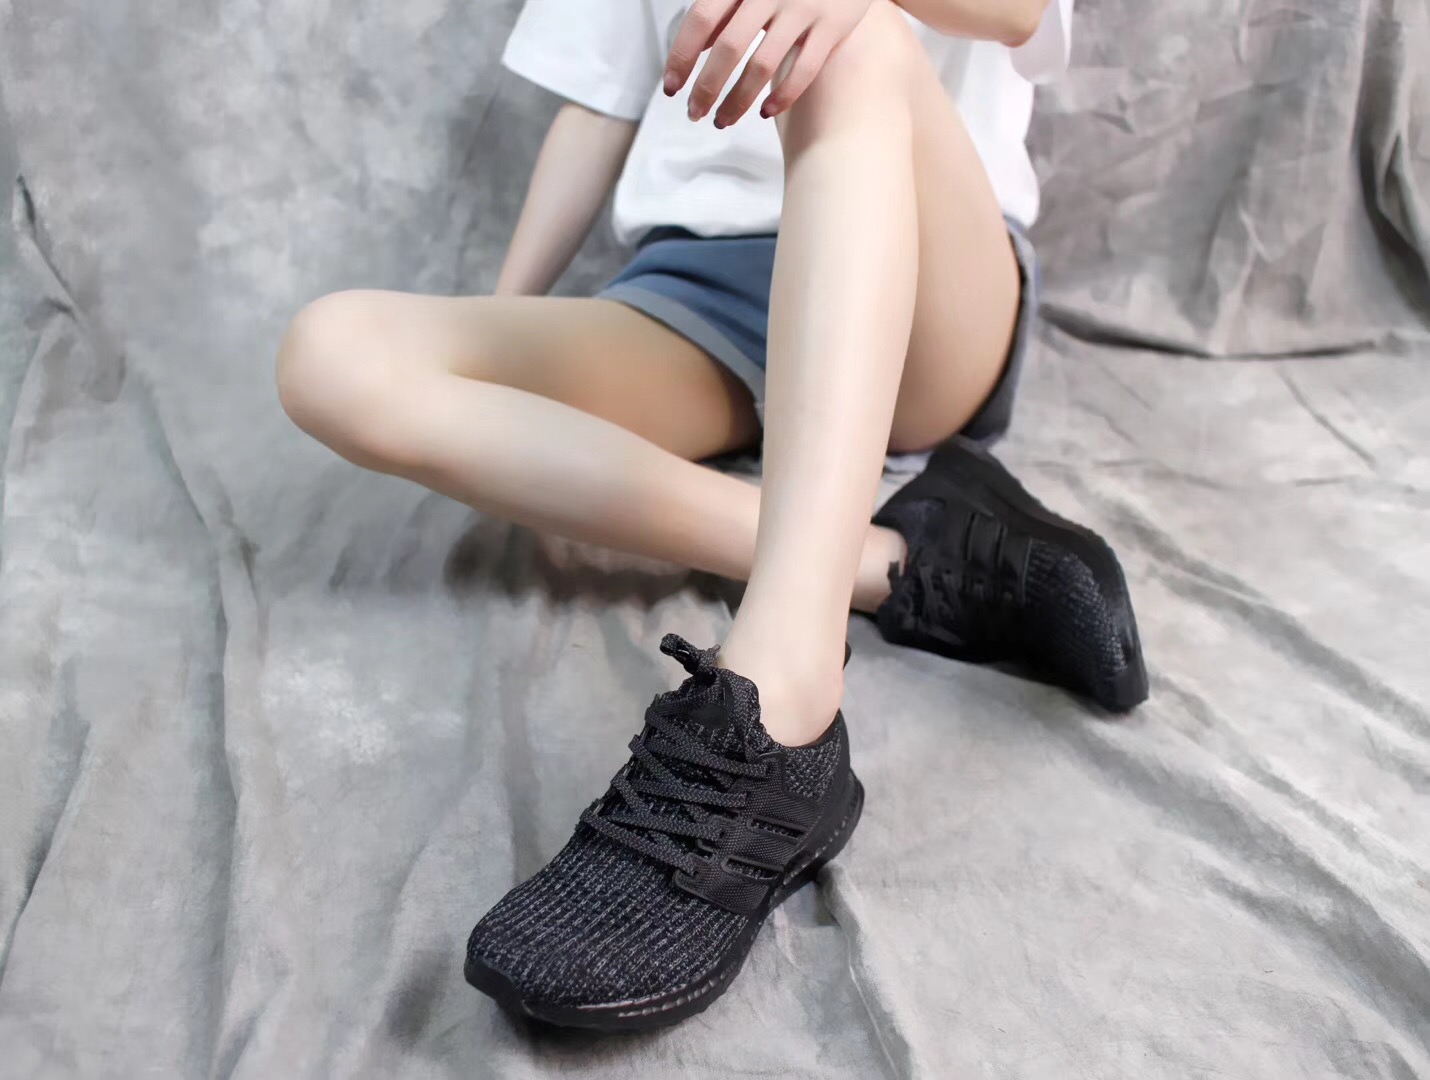 Giày Adidas Ultra Boost 3.0 màu đen